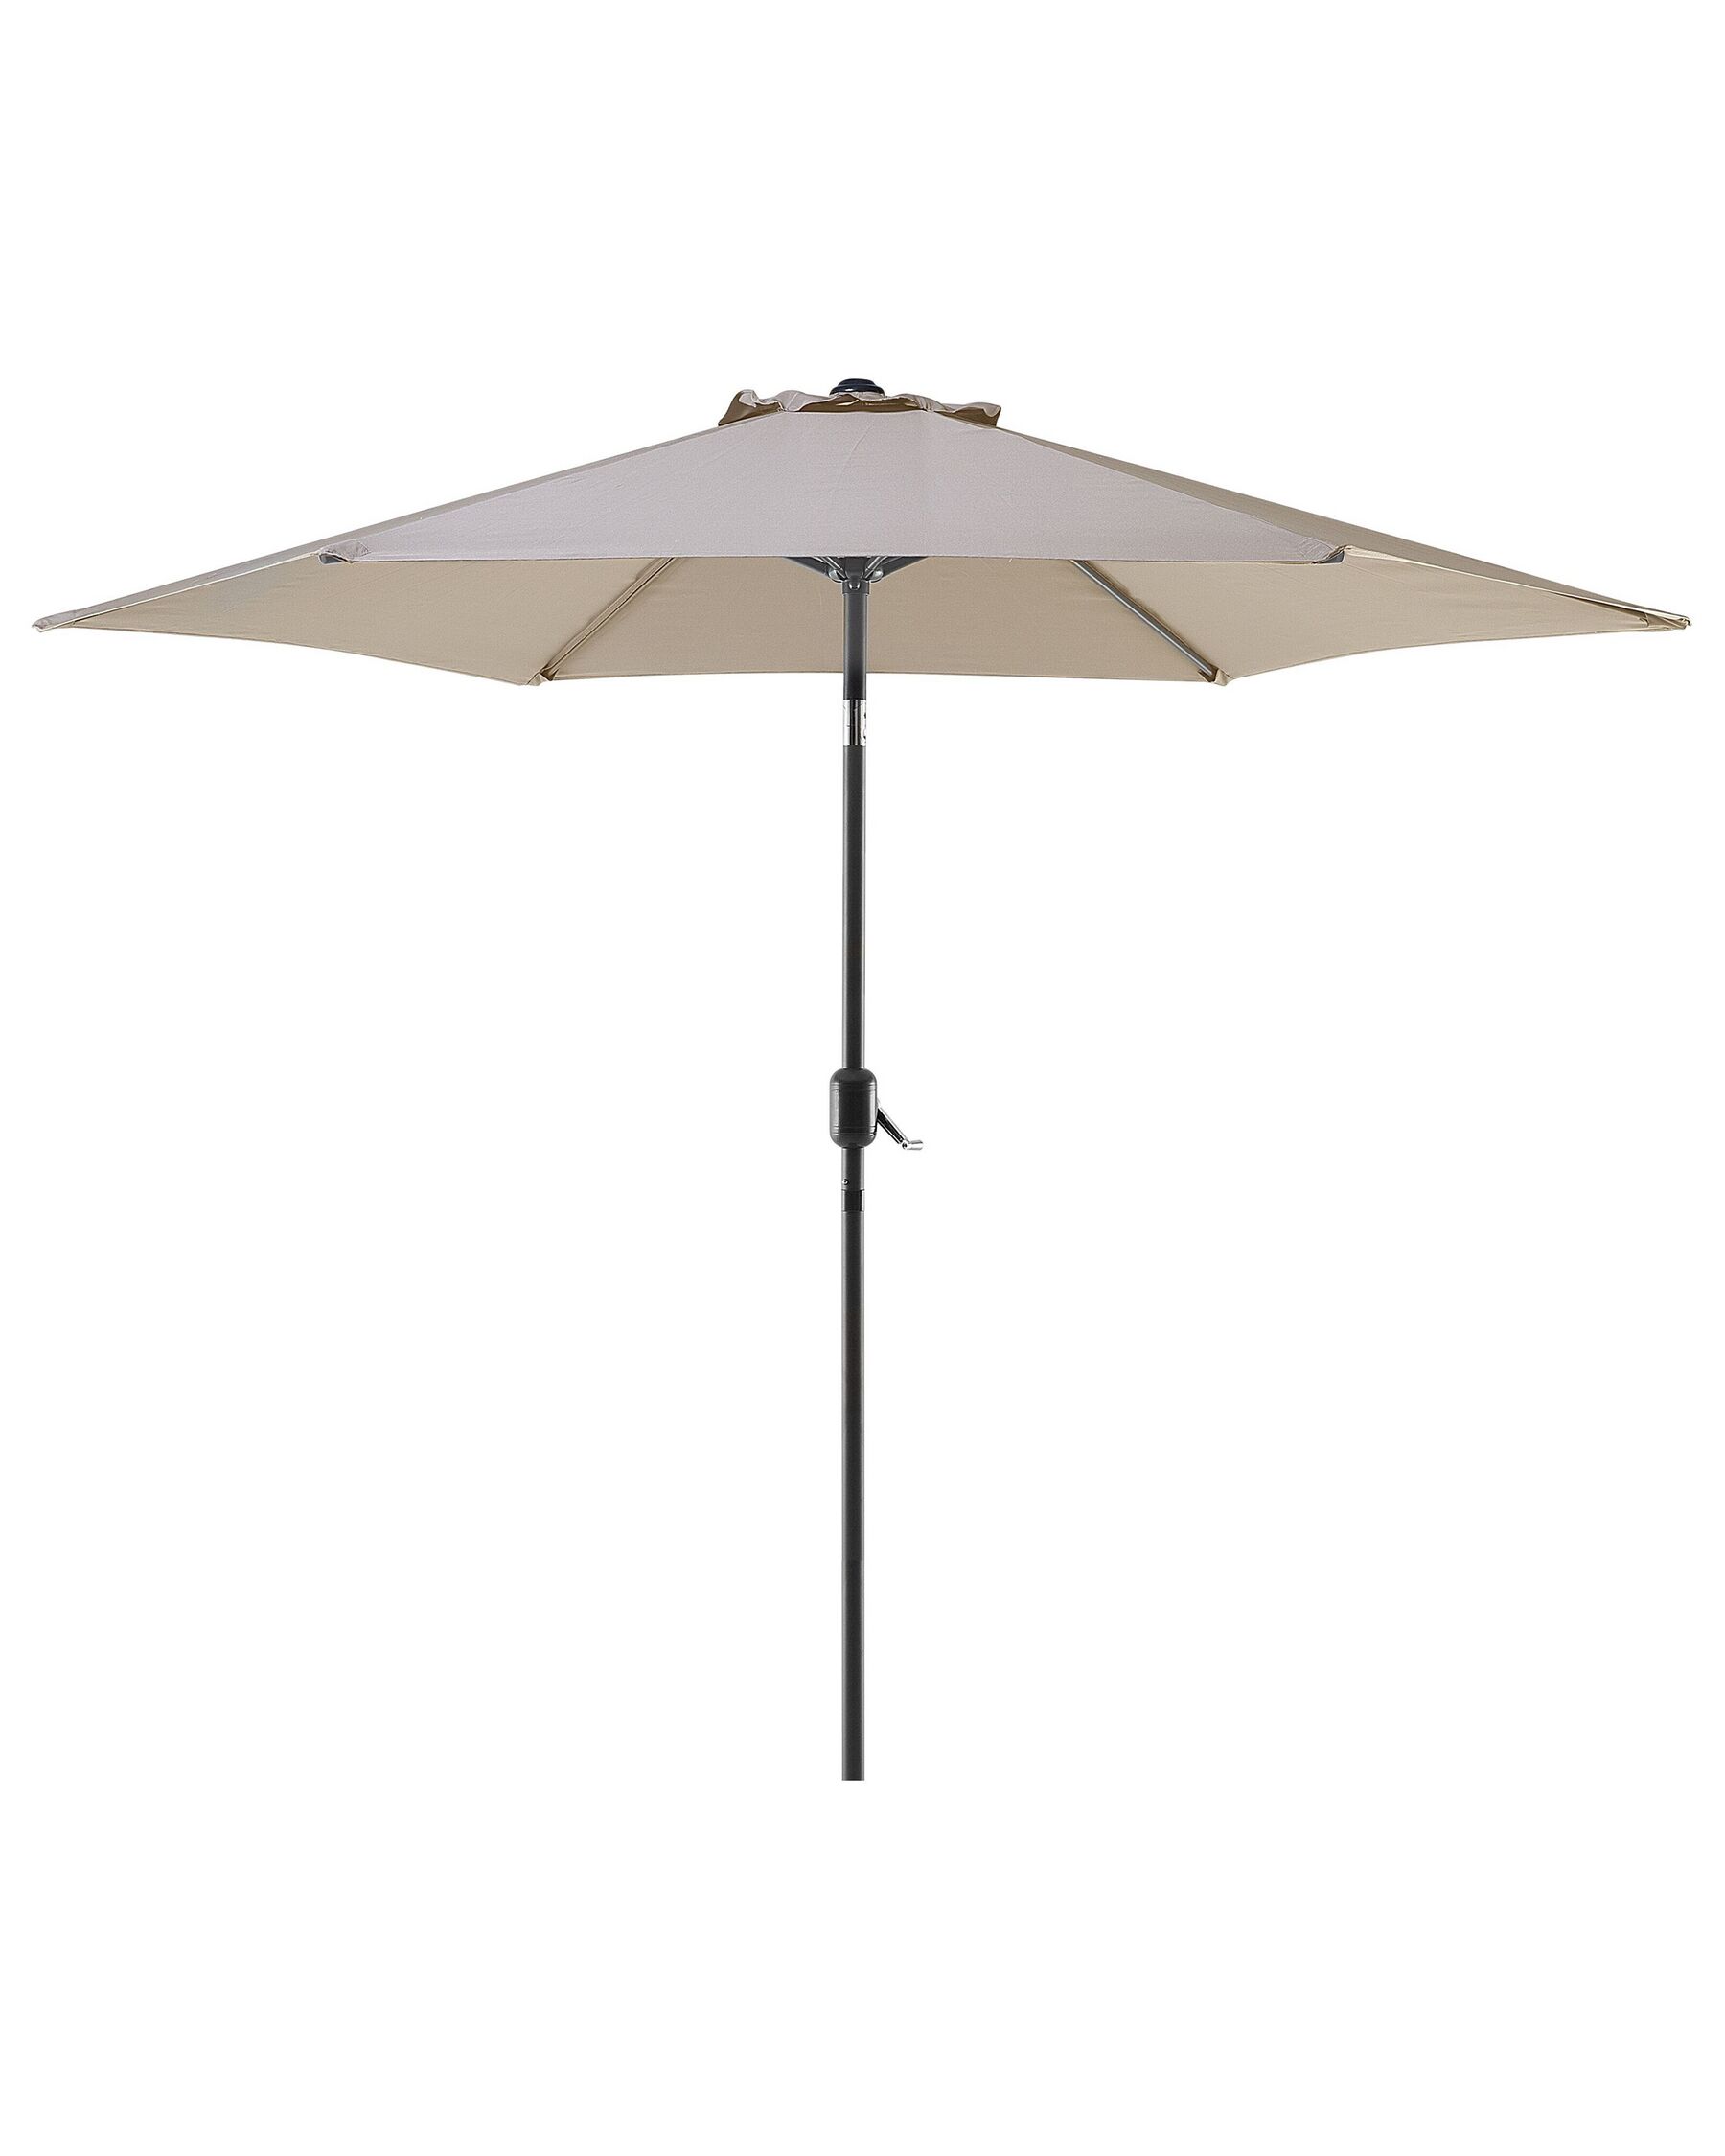 Parasol de jardin en aluminium avec toile beige taupe ⌀ 270 cm VARESE_765082